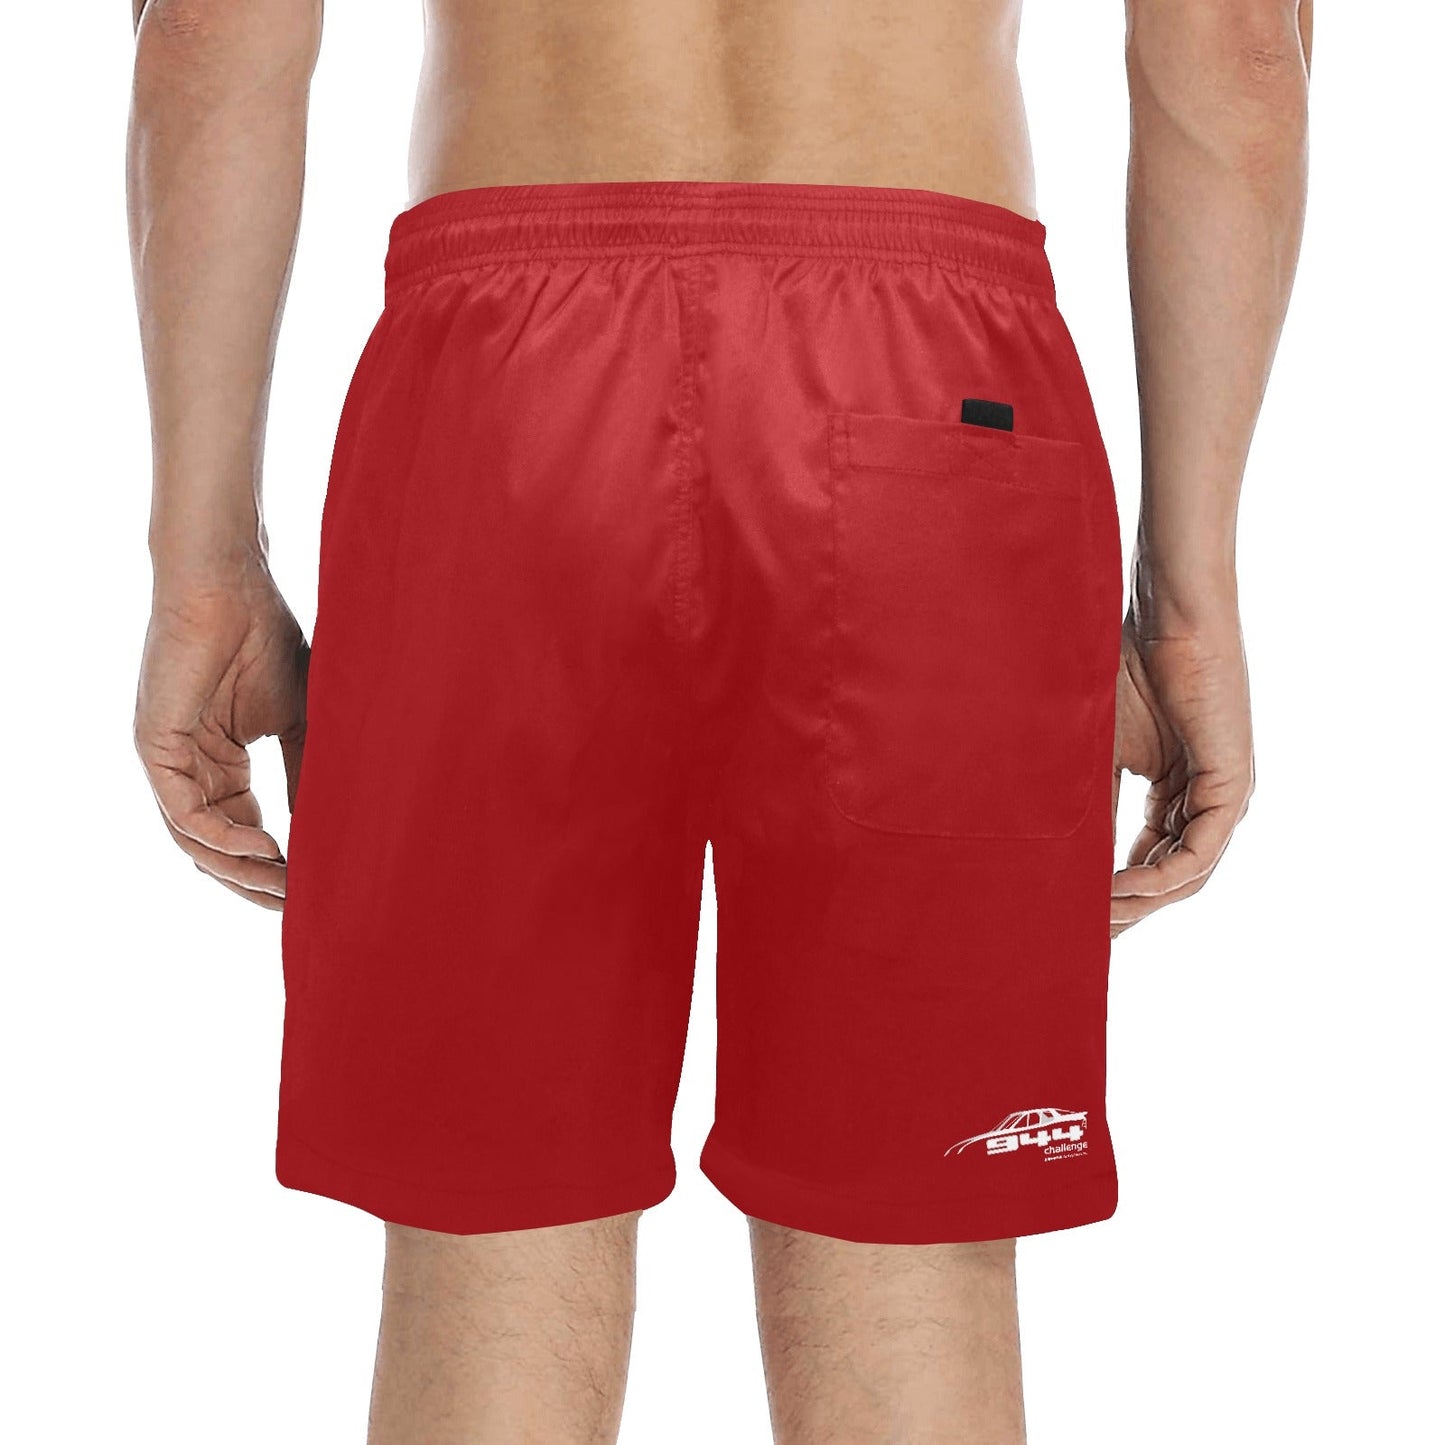 944 CHALLENGE waterproof Shorts - red flag